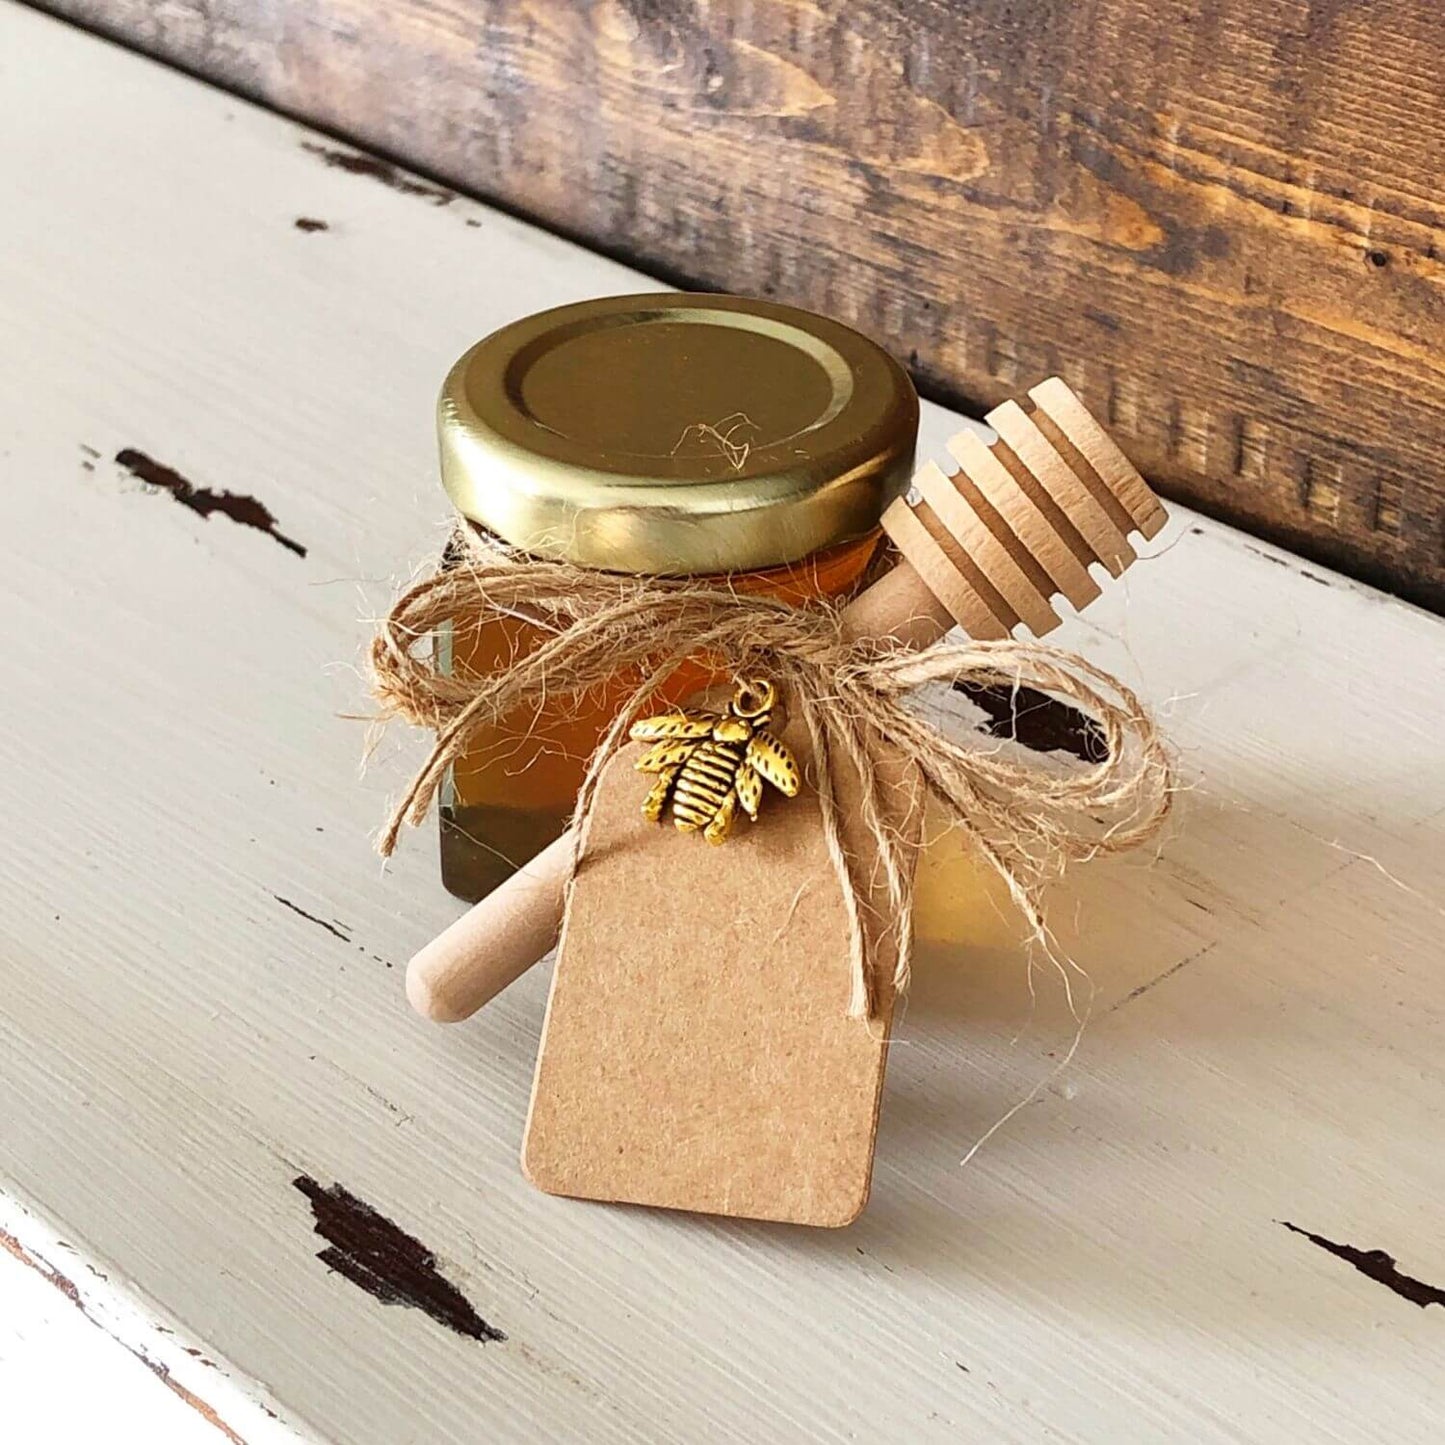 Honey Favor Kit - 2 oz Hexagon Jar with Pure Honey, Wooden Honey Dipper, Bee Charm, Twine, & Jute Tags